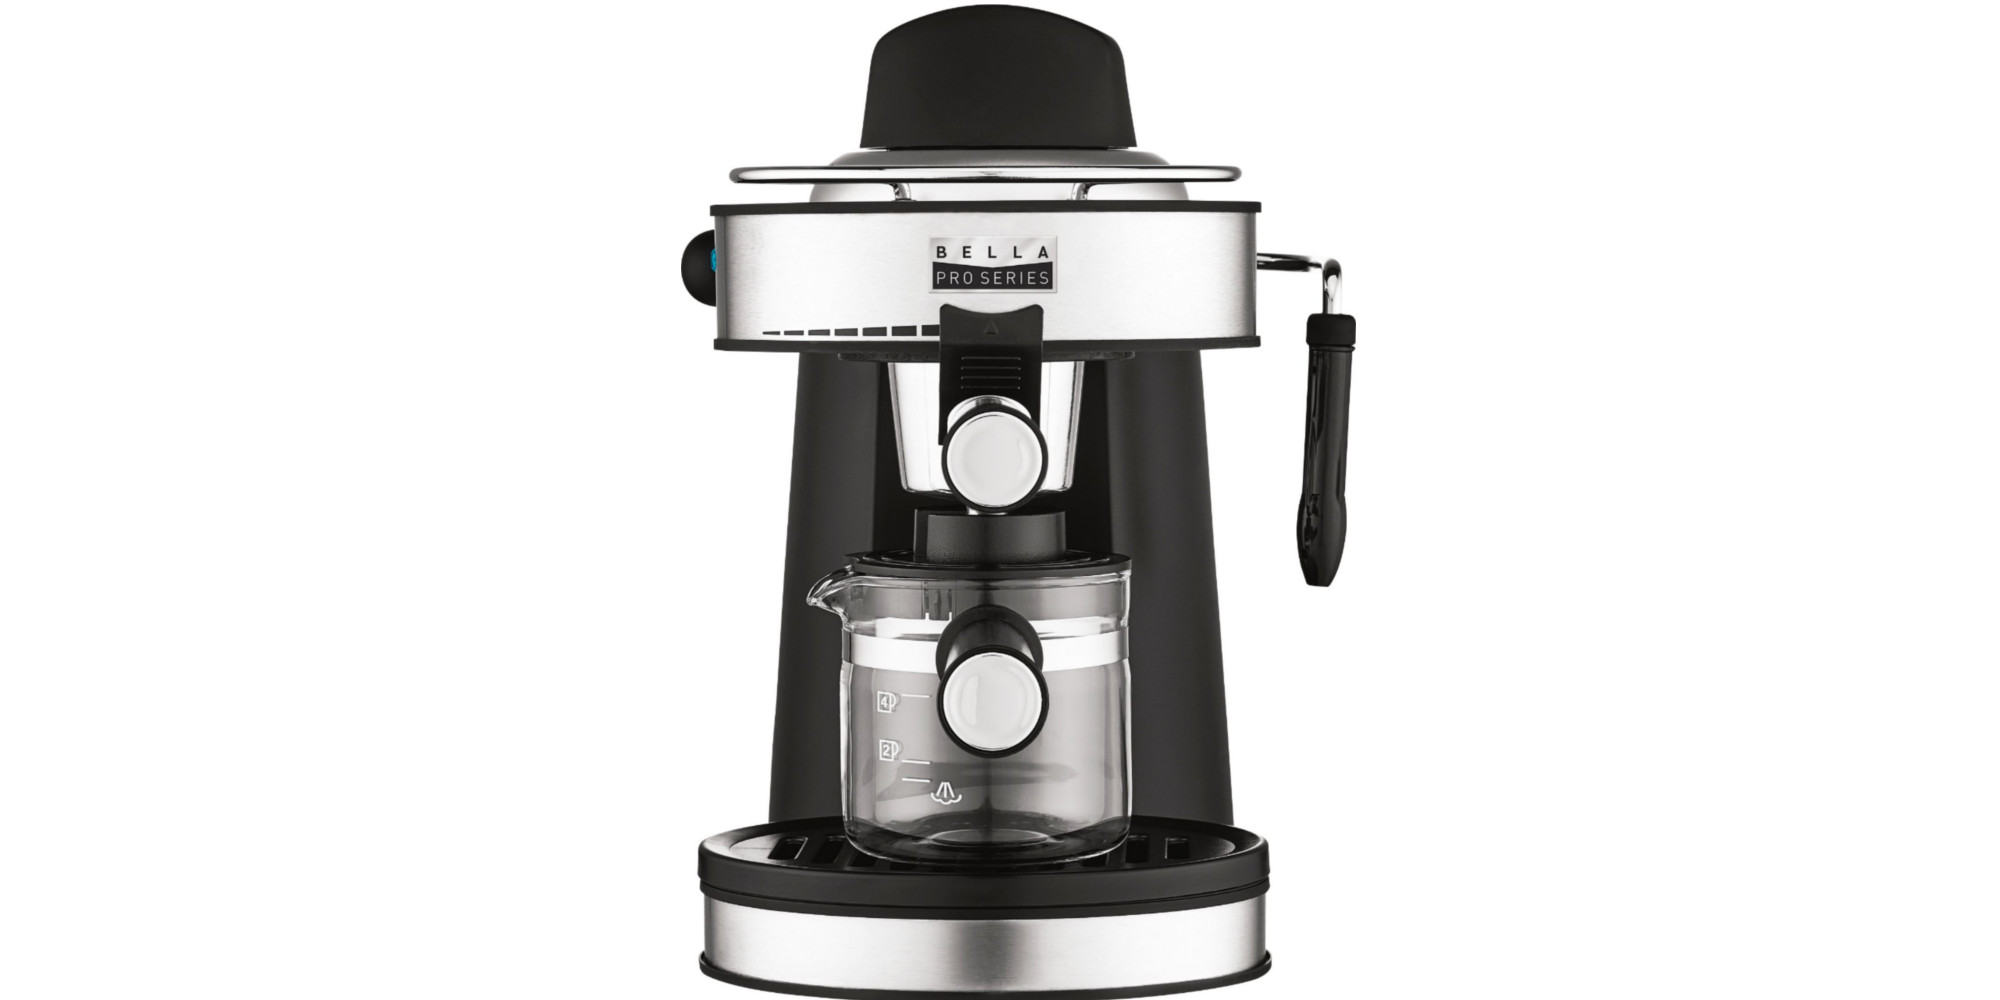 https://9to5toys.com/wp-content/uploads/sites/5/2020/07/Bella-Pro-Series-Espresso-Machine.jpg